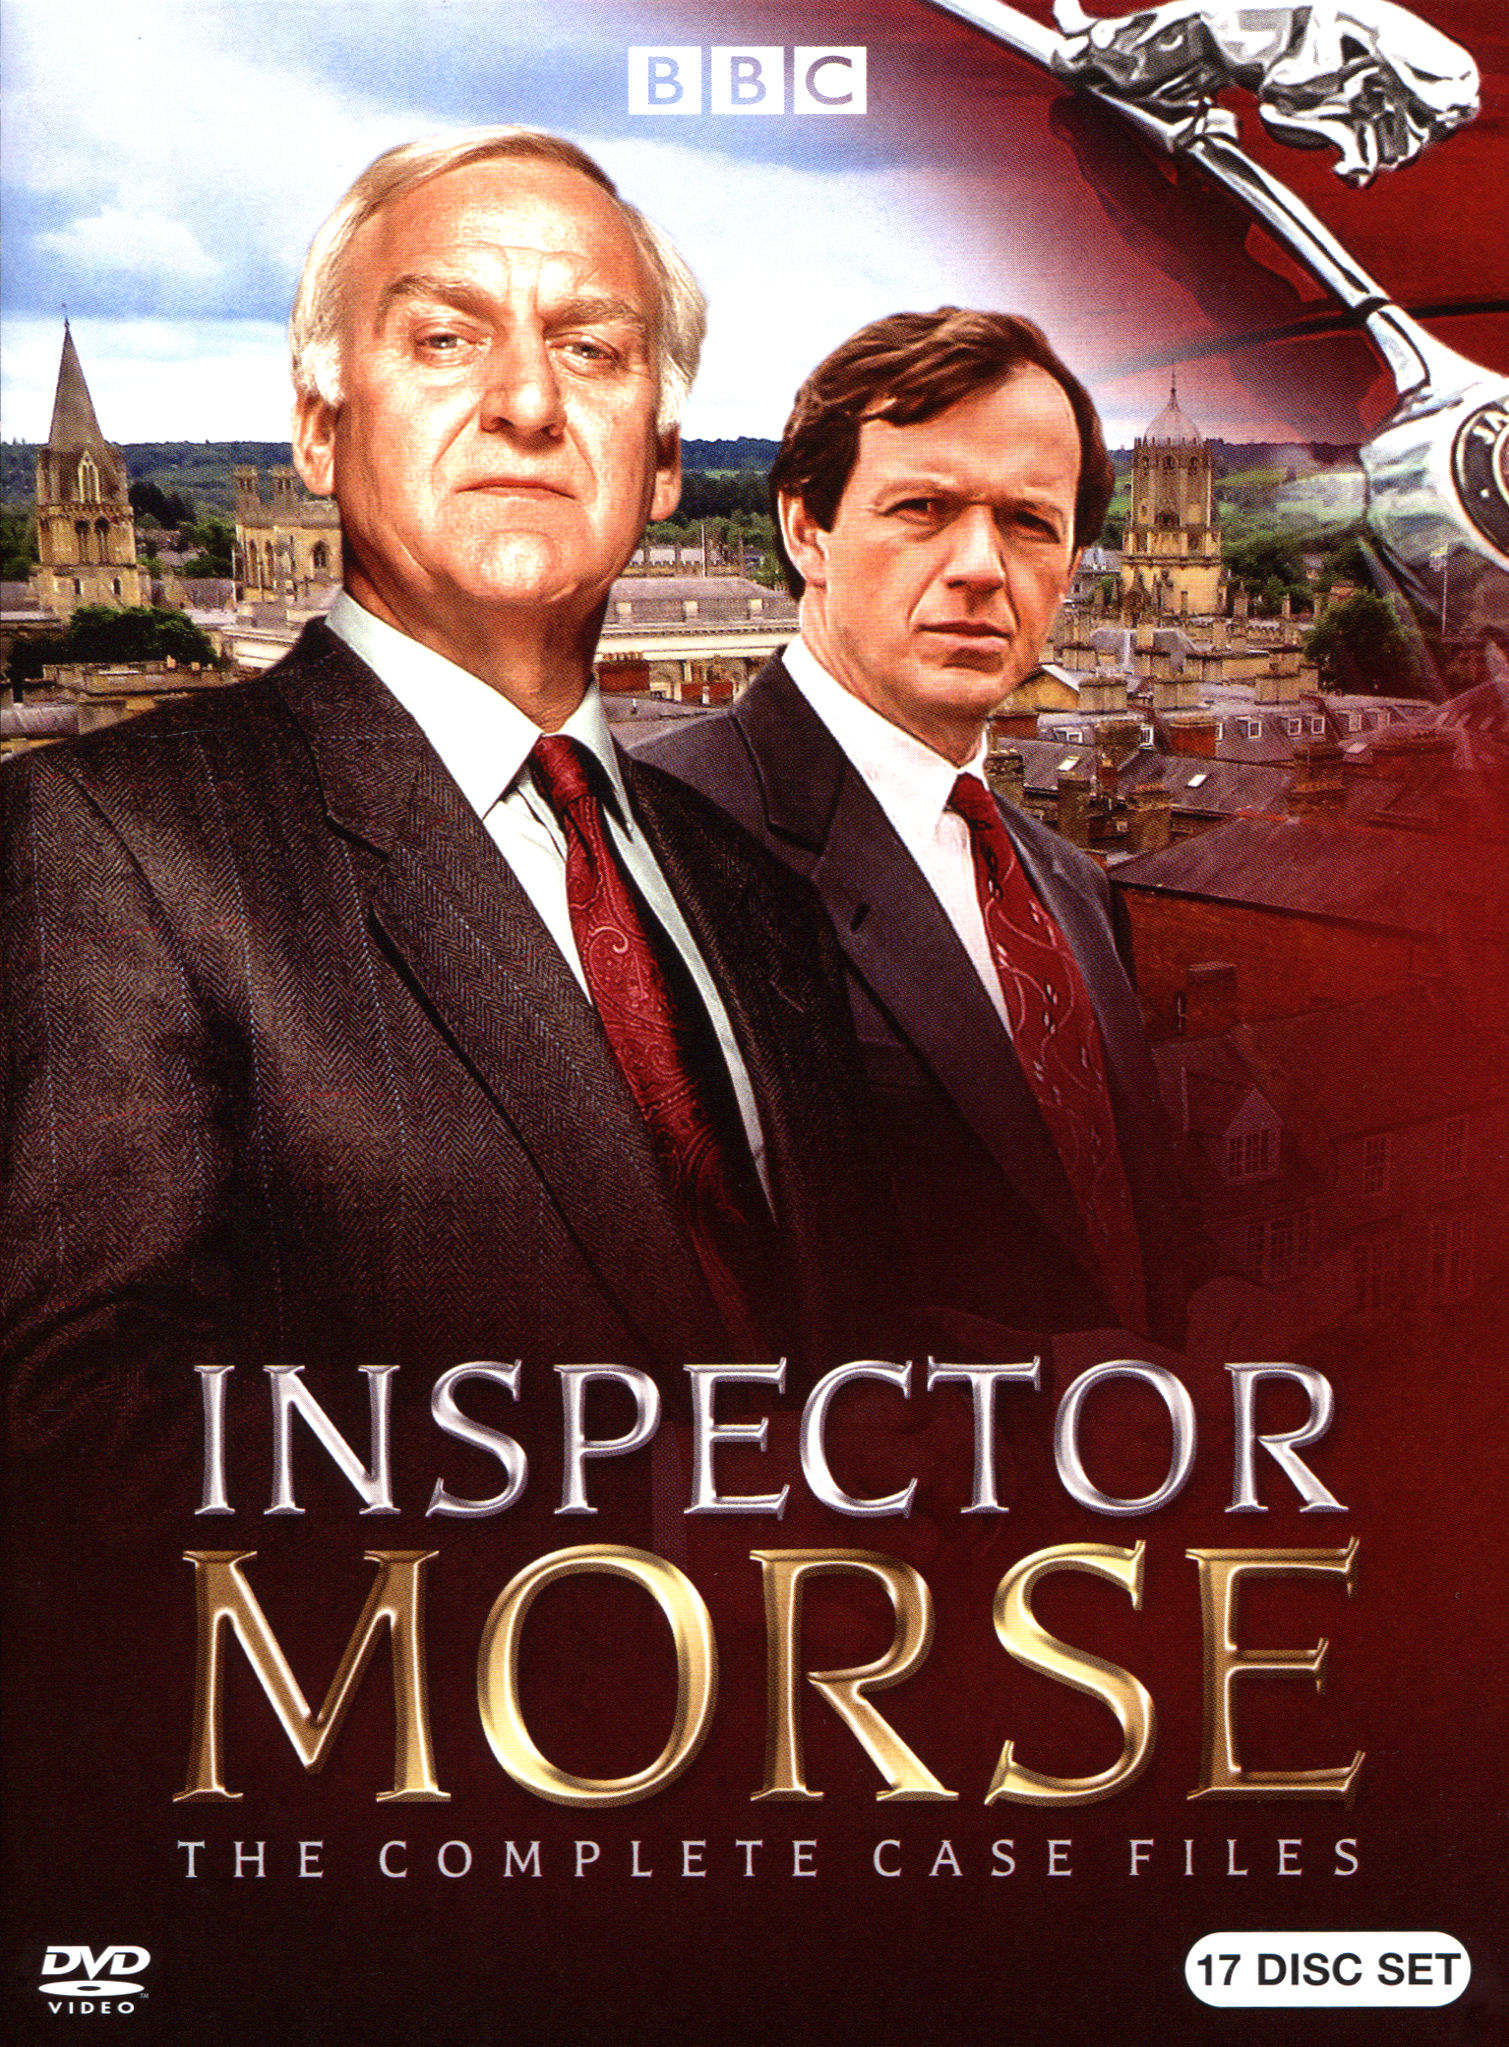 Inspector Morse DvD 8